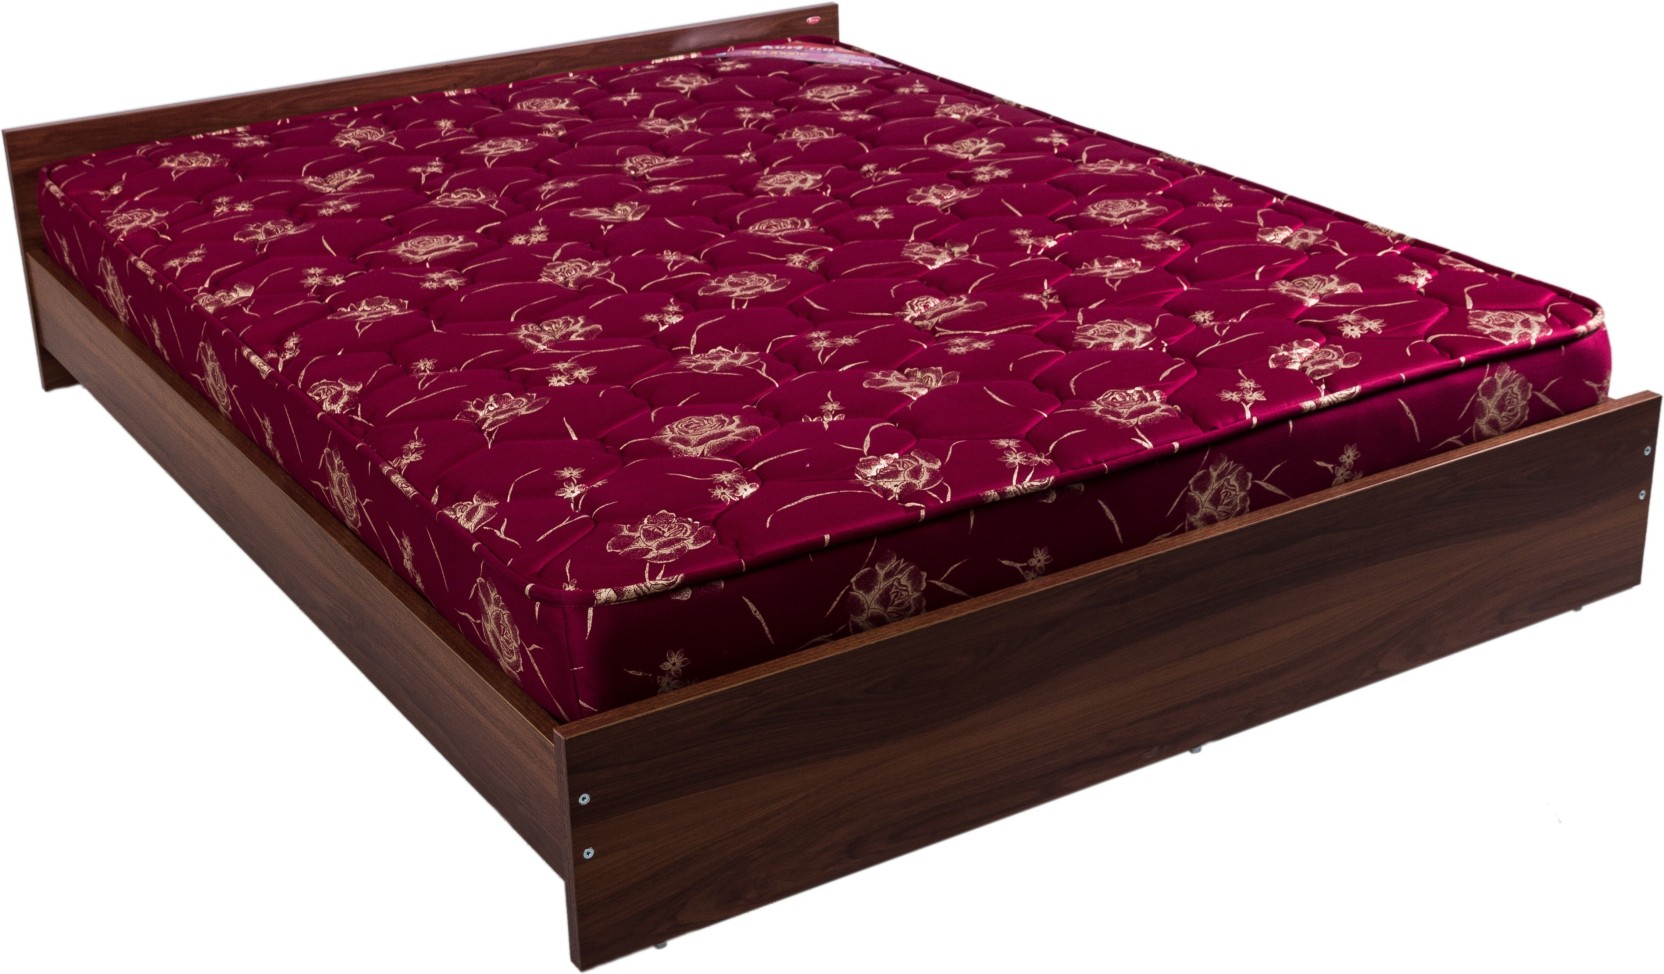 kurl on mattress double bed price